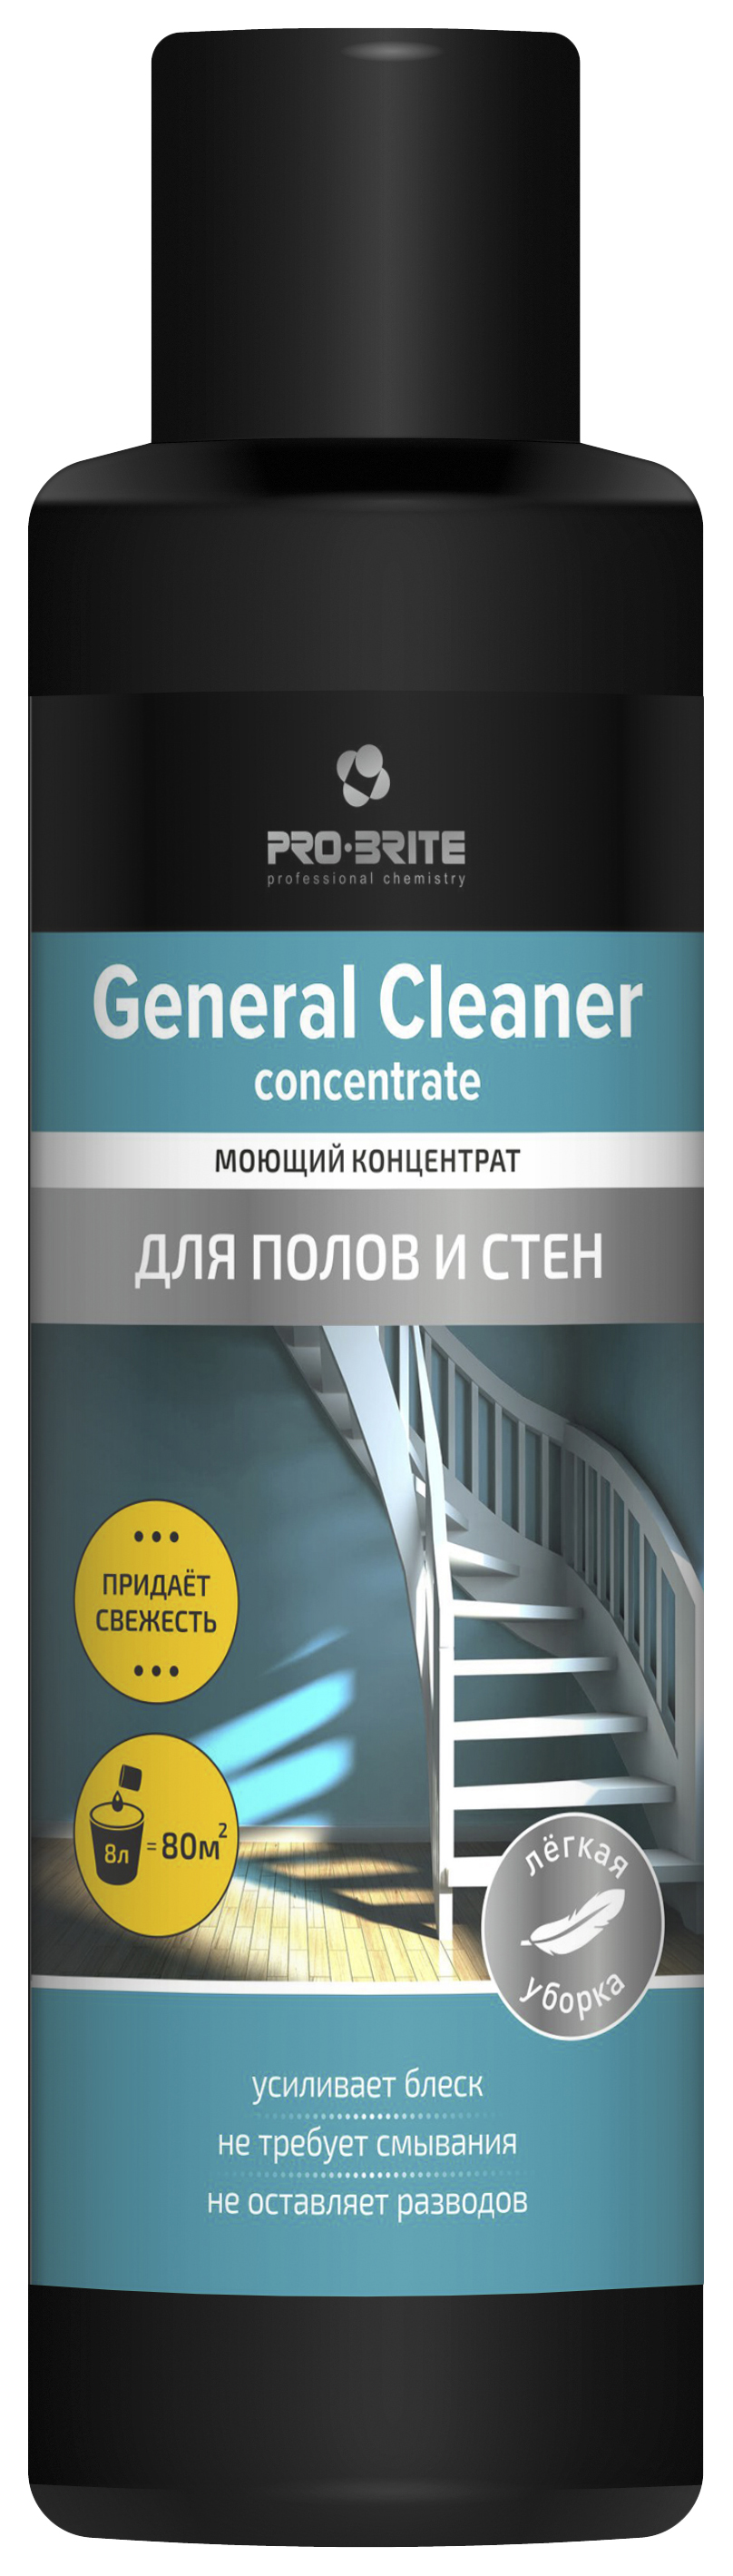 Моющий концентрат для полов и стен Pro-Brite General cleaner concentrate, 3 шт.